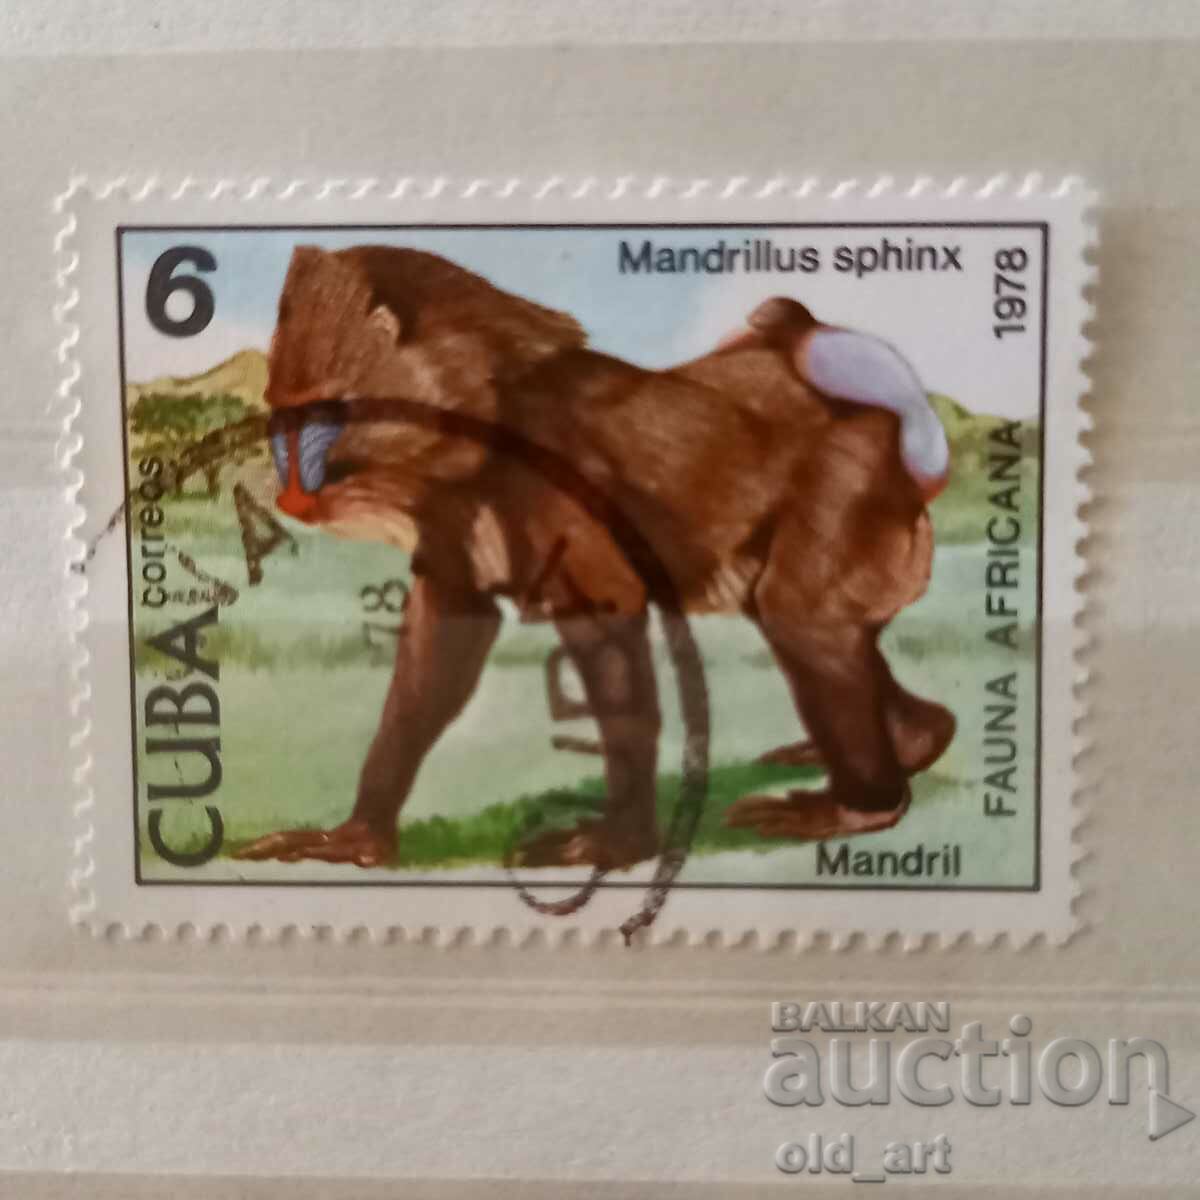 Postage stamp - Cuba, Monkeys